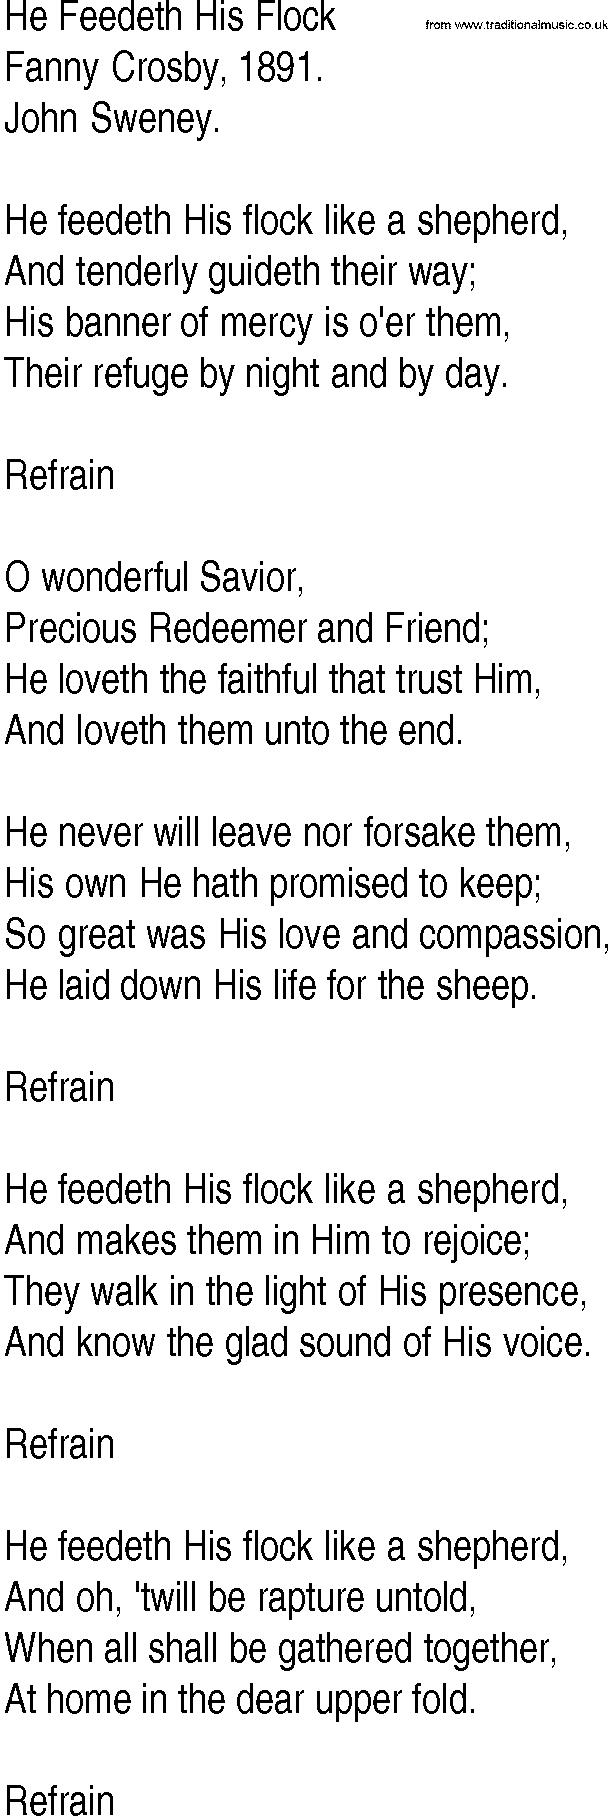 Hymn and Gospel Song: He Feedeth His Flock by Fanny Crosby lyrics